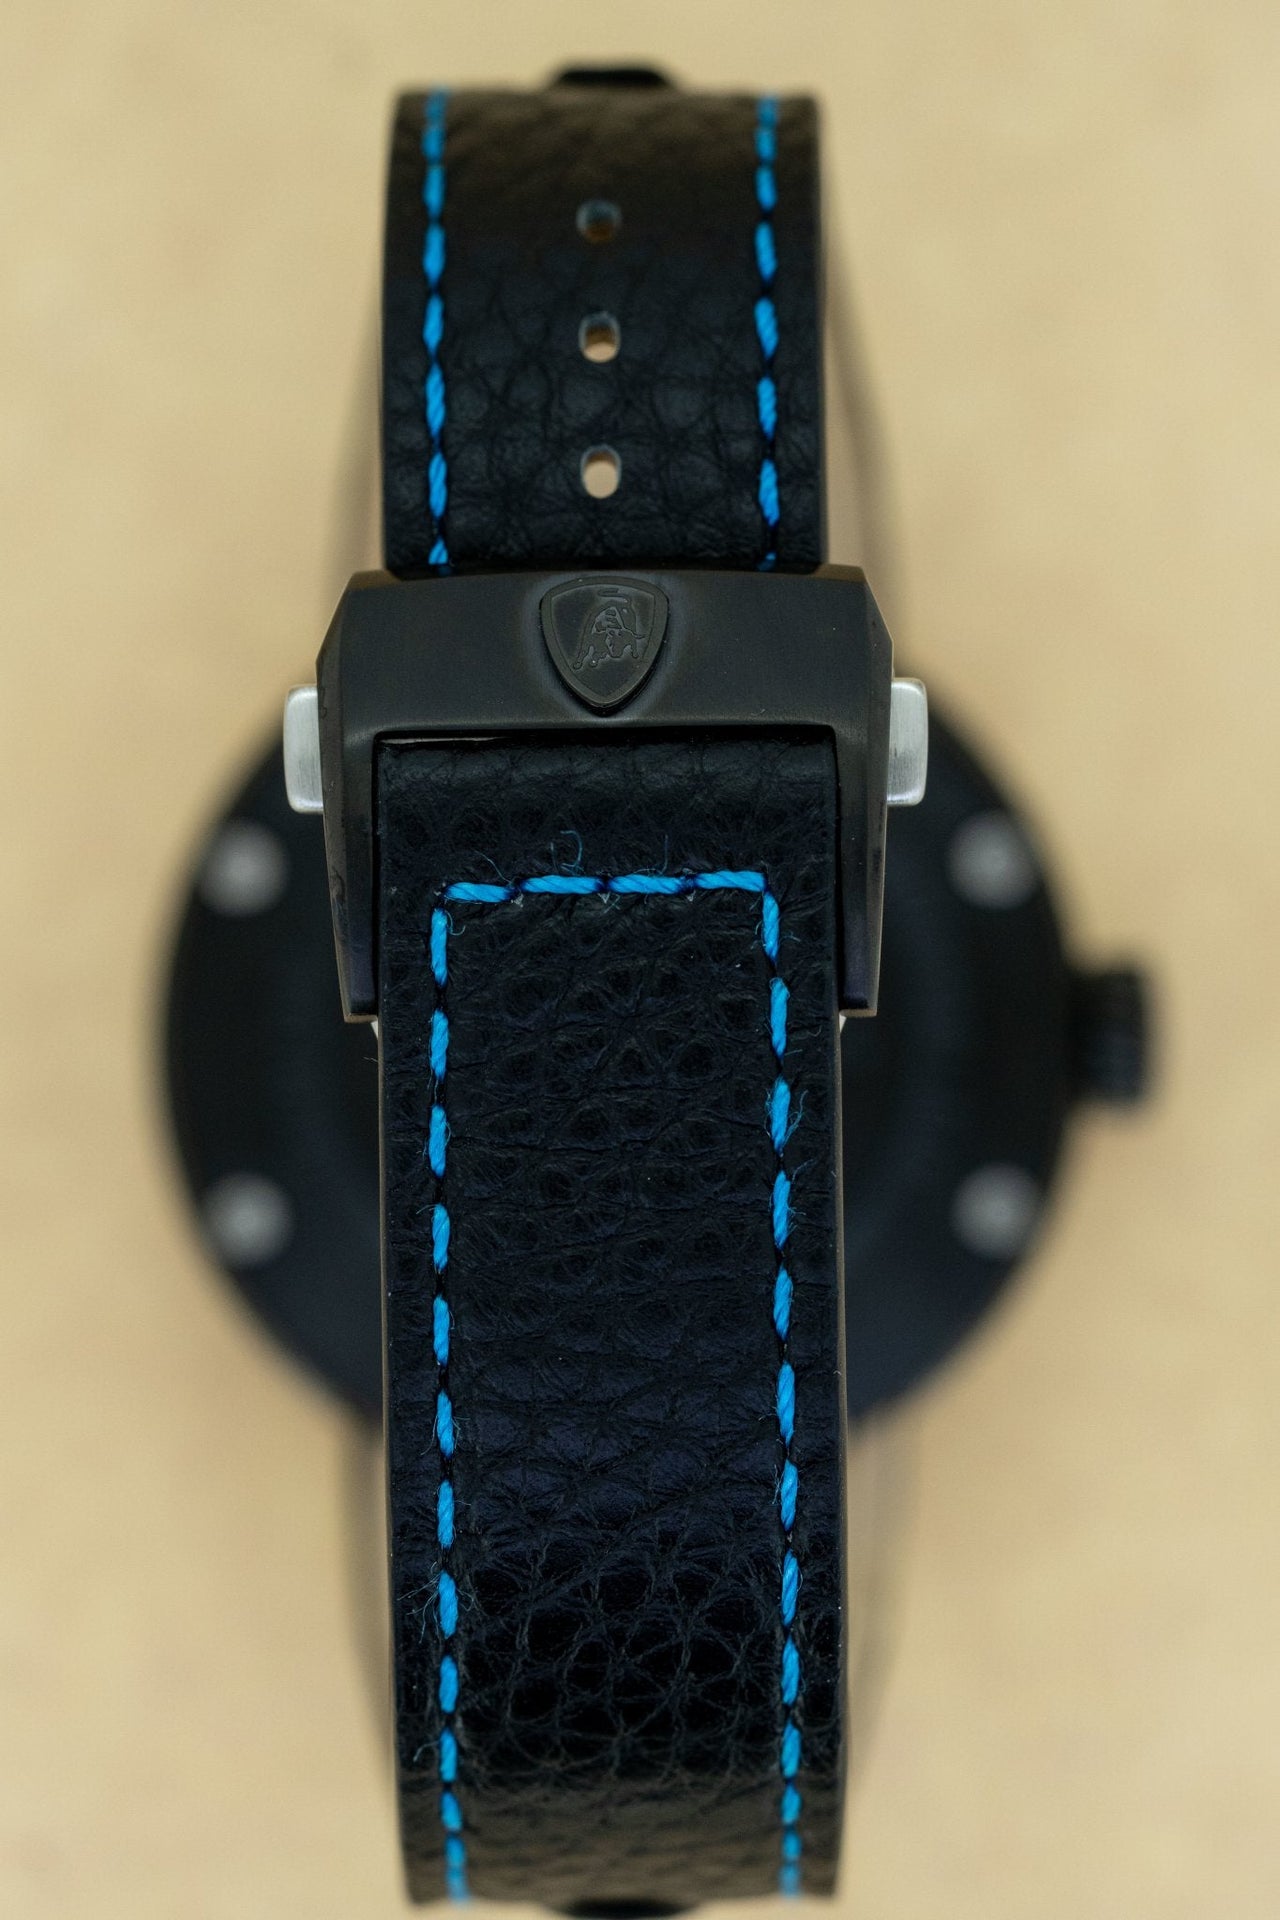 Tonino Lamborghini Cuscinetto Date Blue - Watches & Crystals